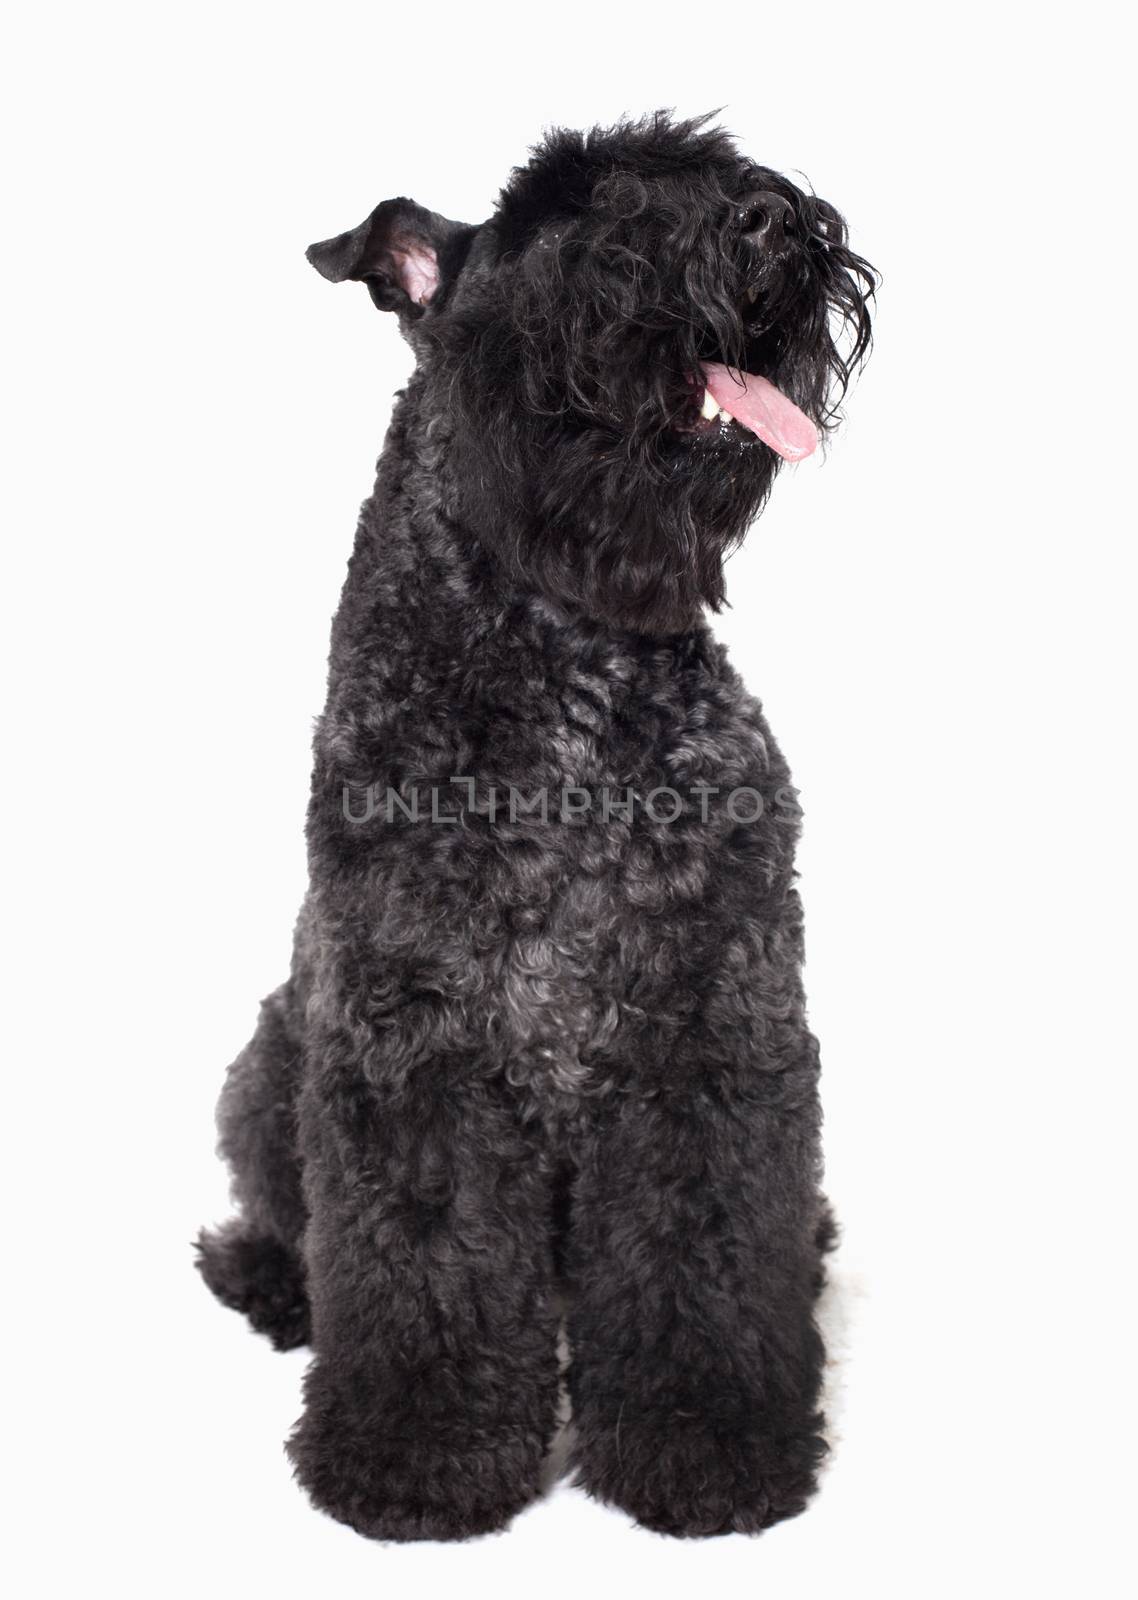 Portrait of black dog, studio shot  by XiXinXing